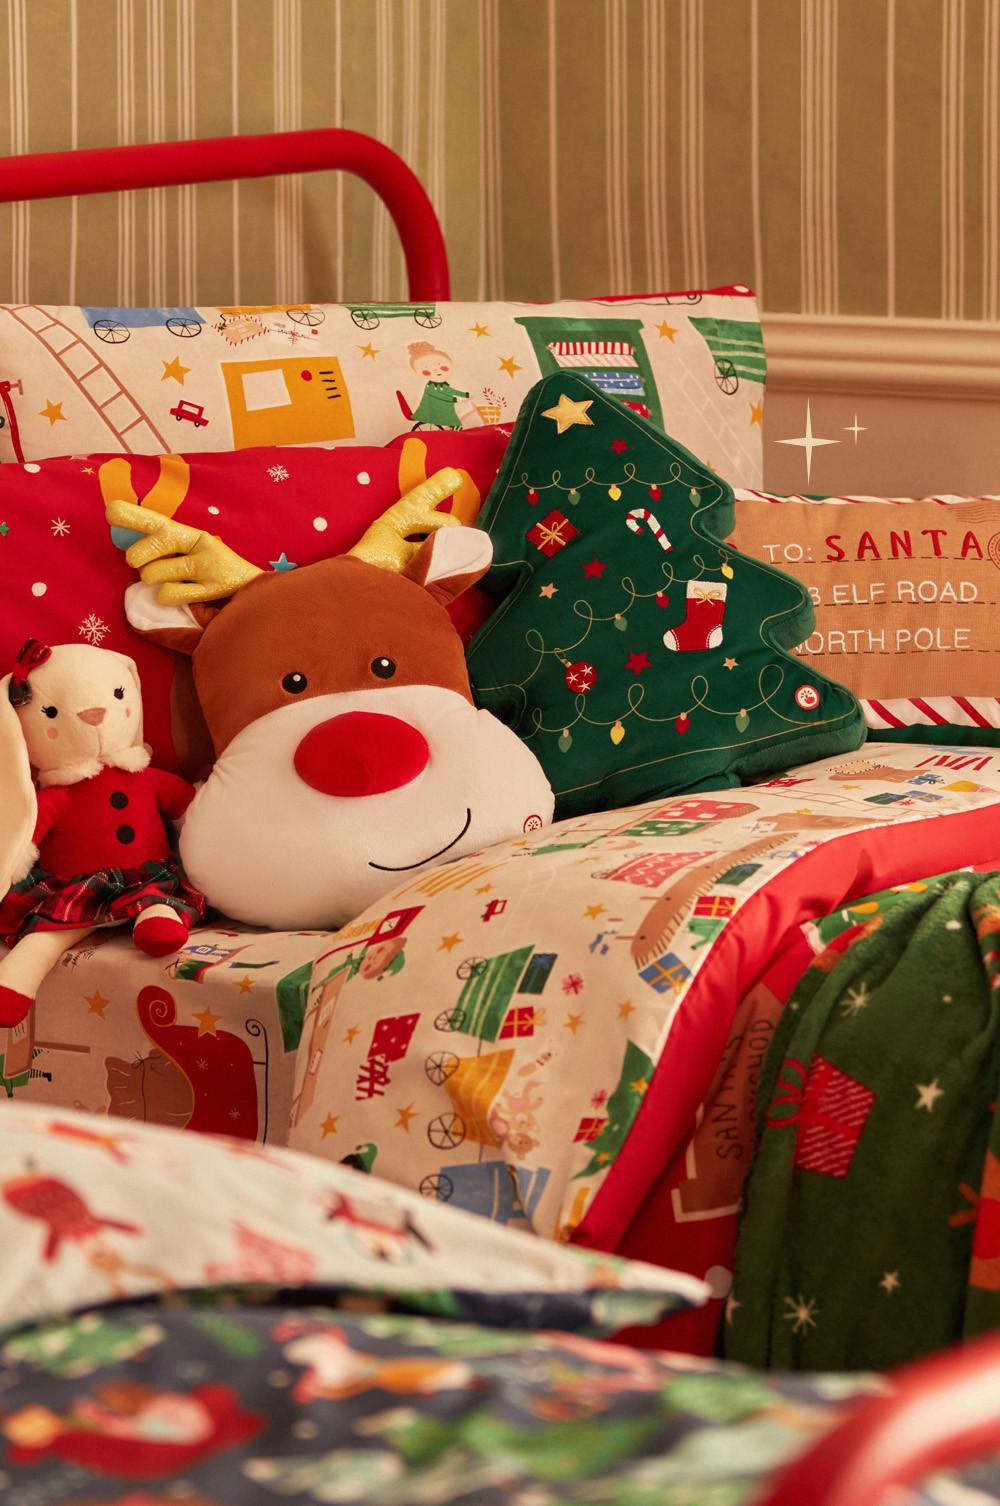 Christmas bedding and cushions